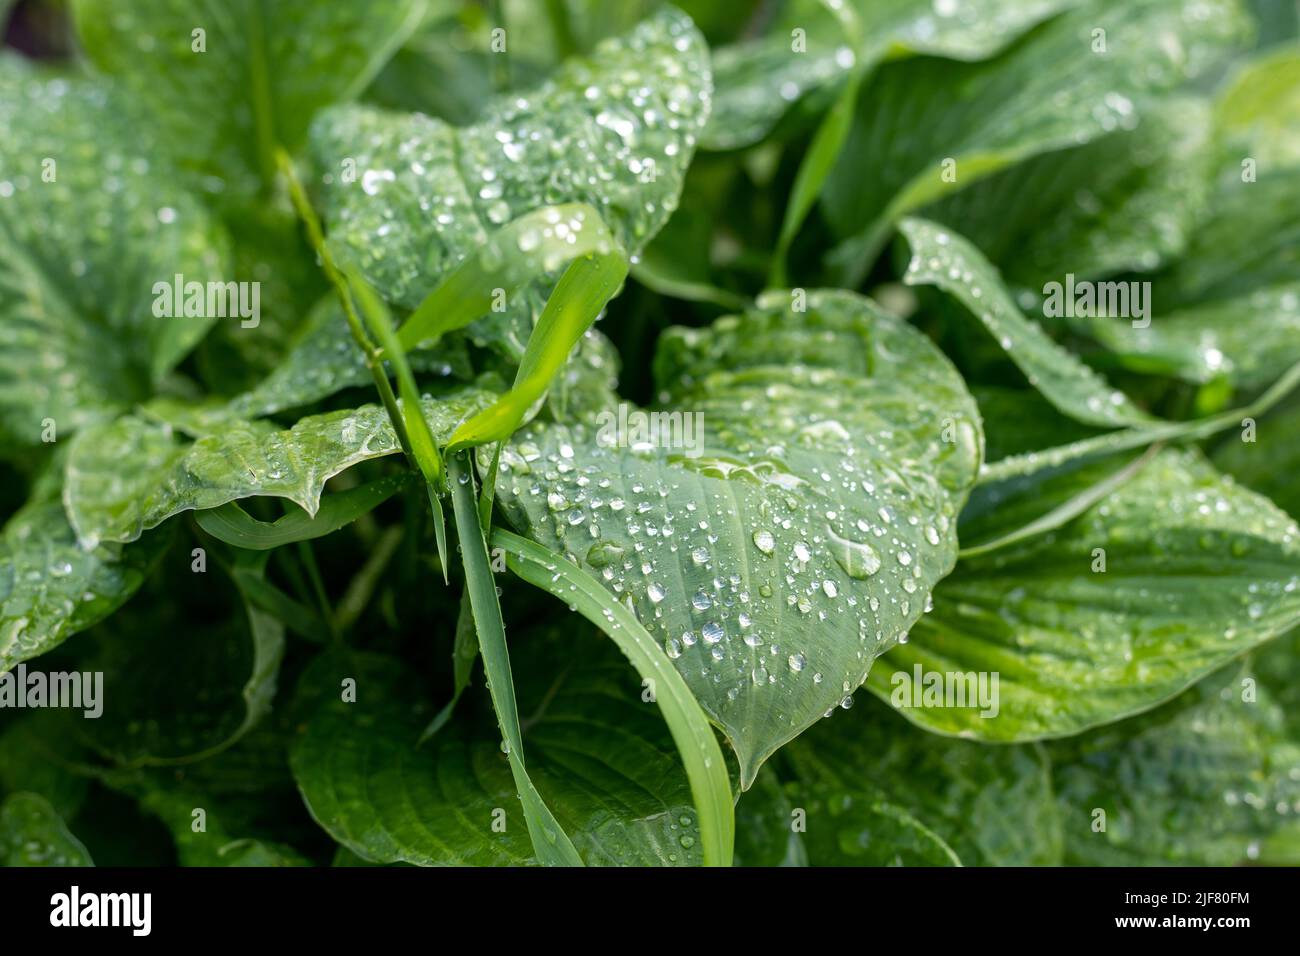 Raindrops on big green leaves Stock Photo